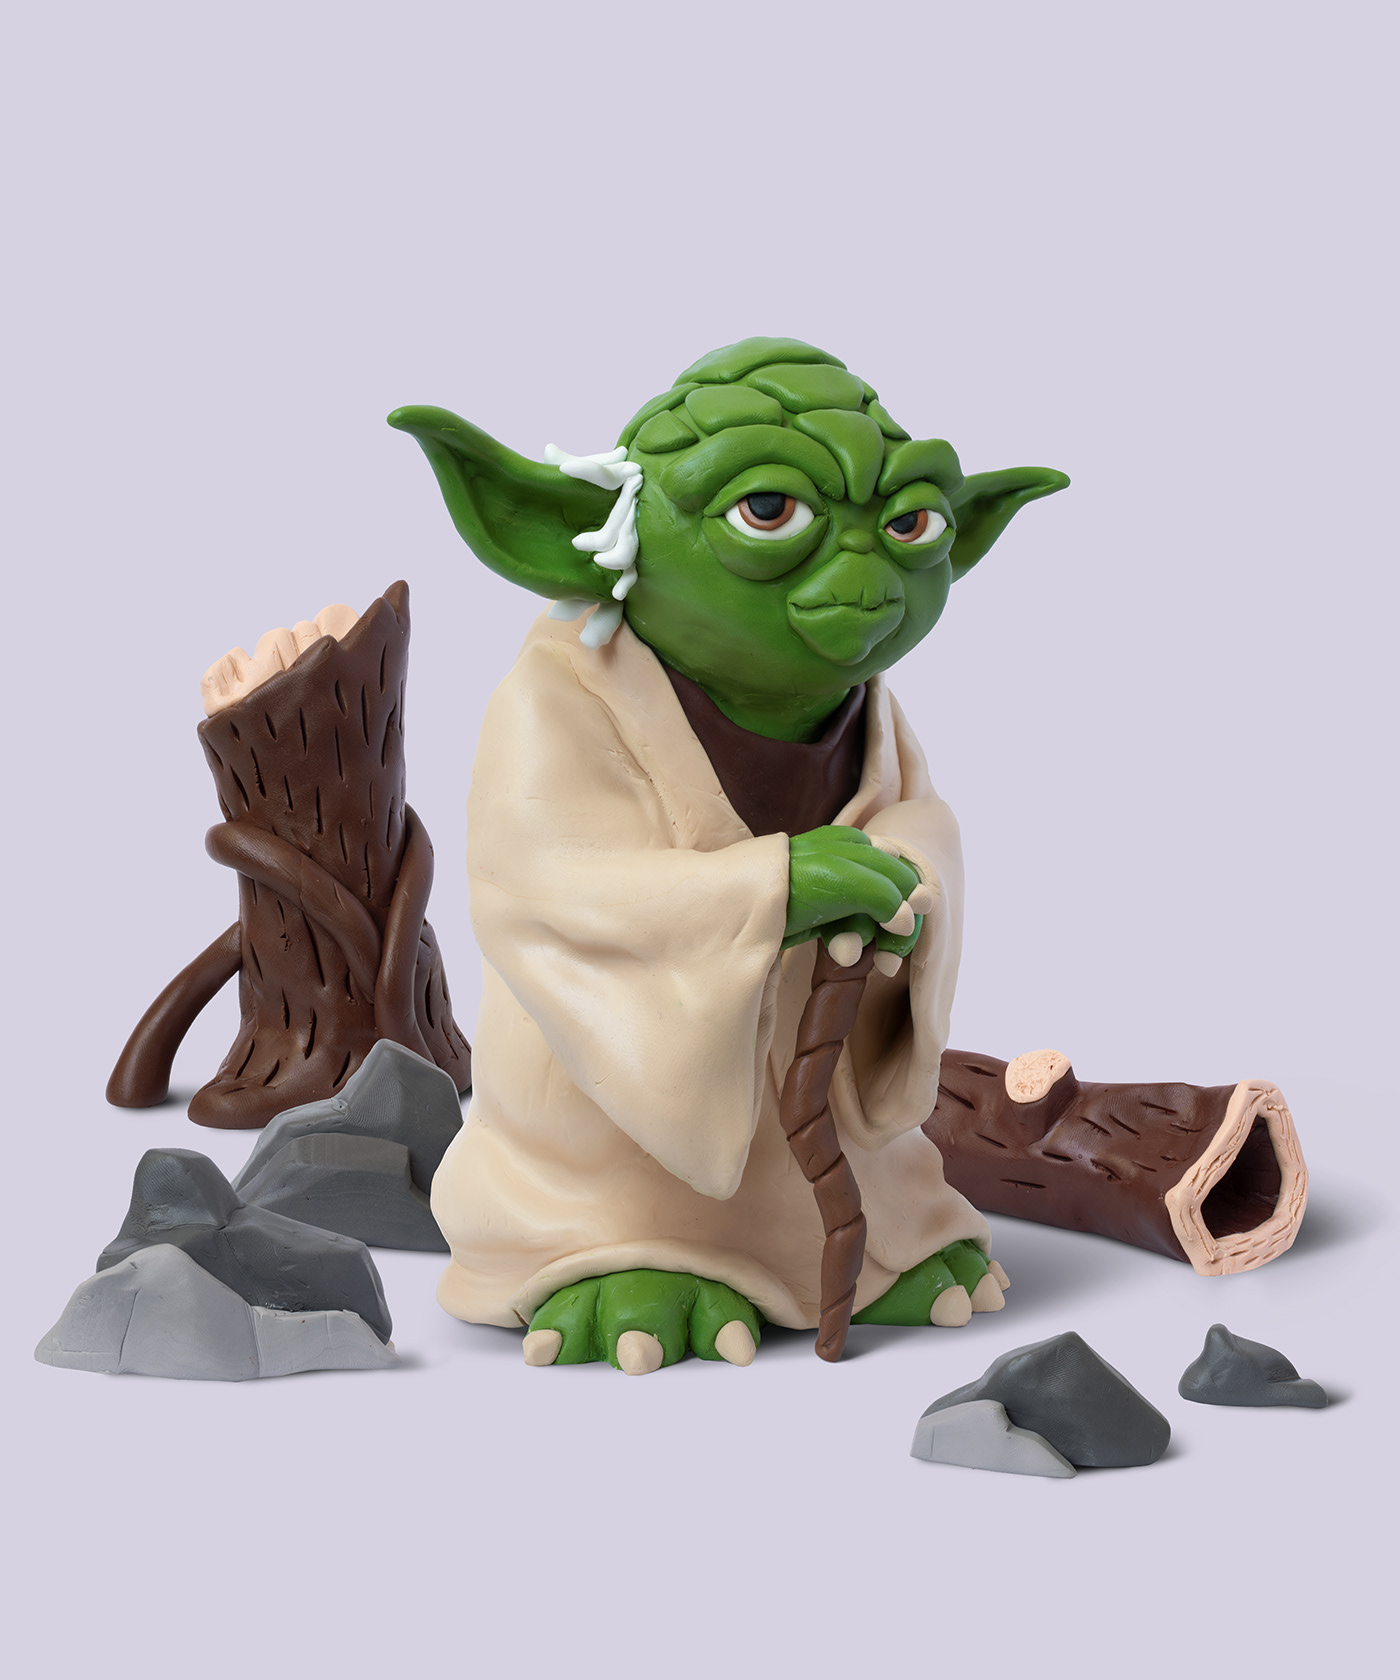 clay illustration of Star Wars Yoda
modelled by Andi Meier